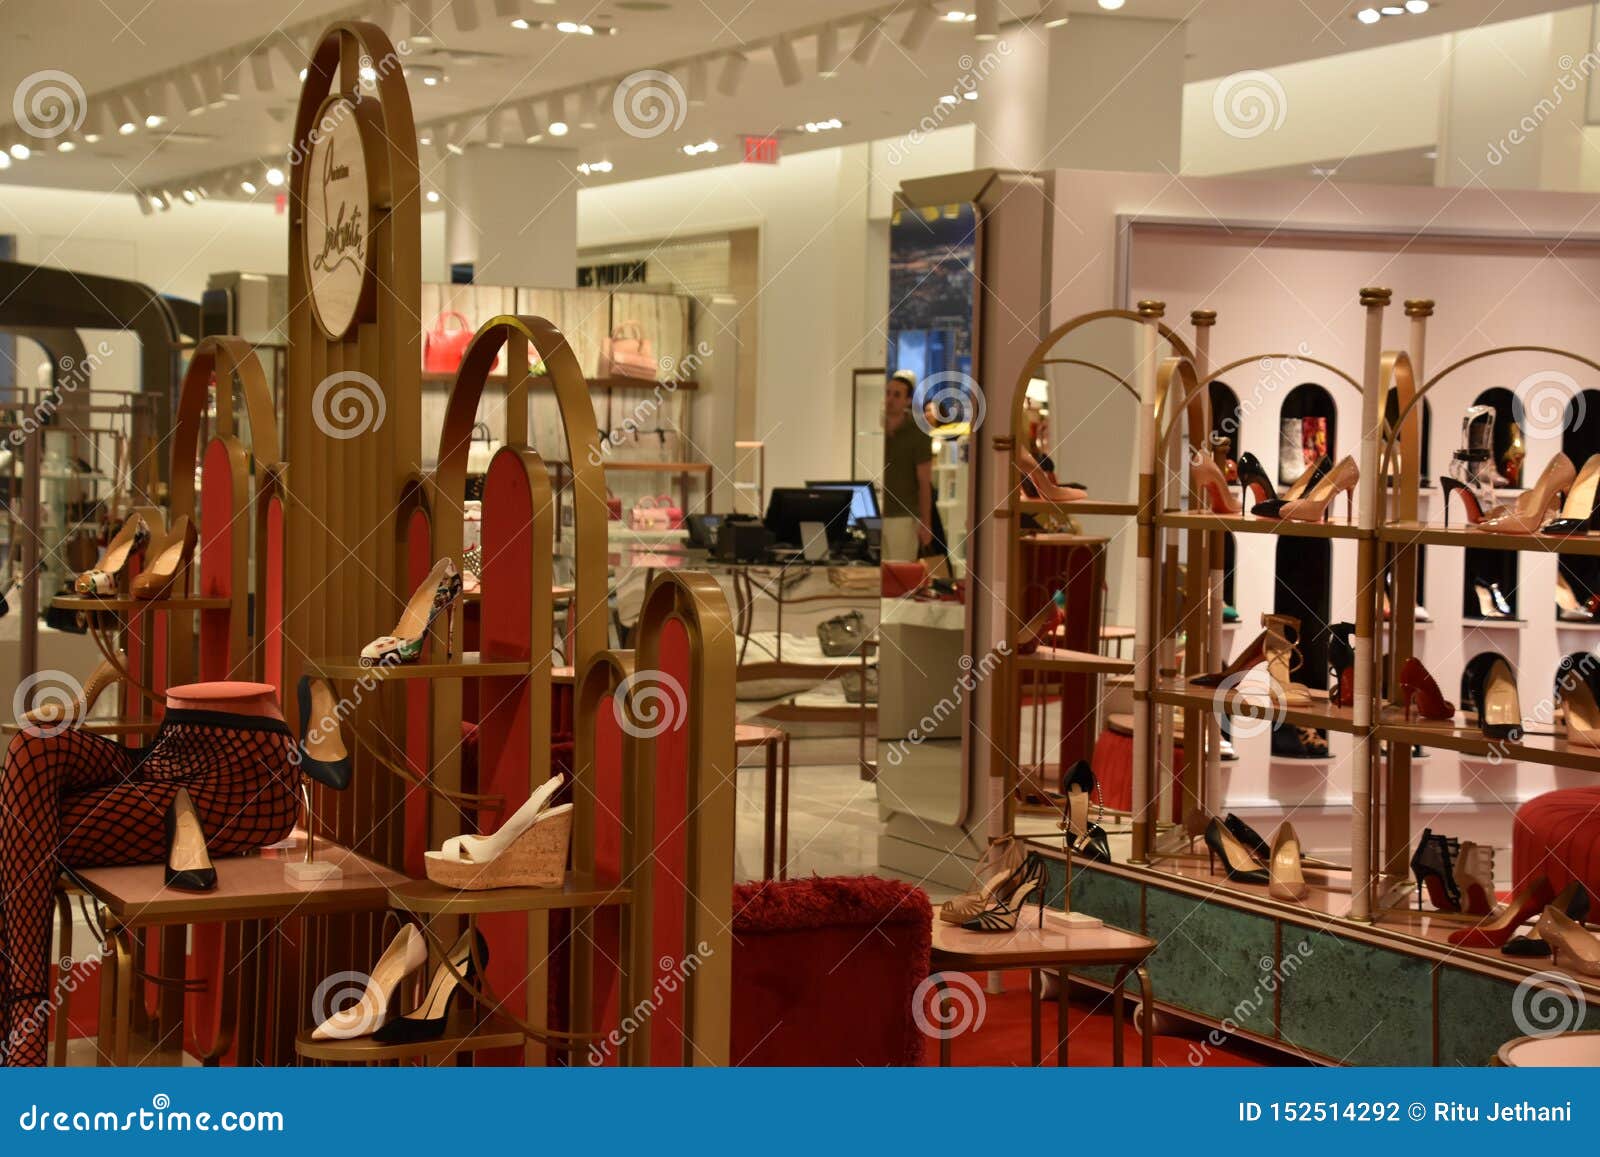 Louis Vuitton Hudson Yards store, United States